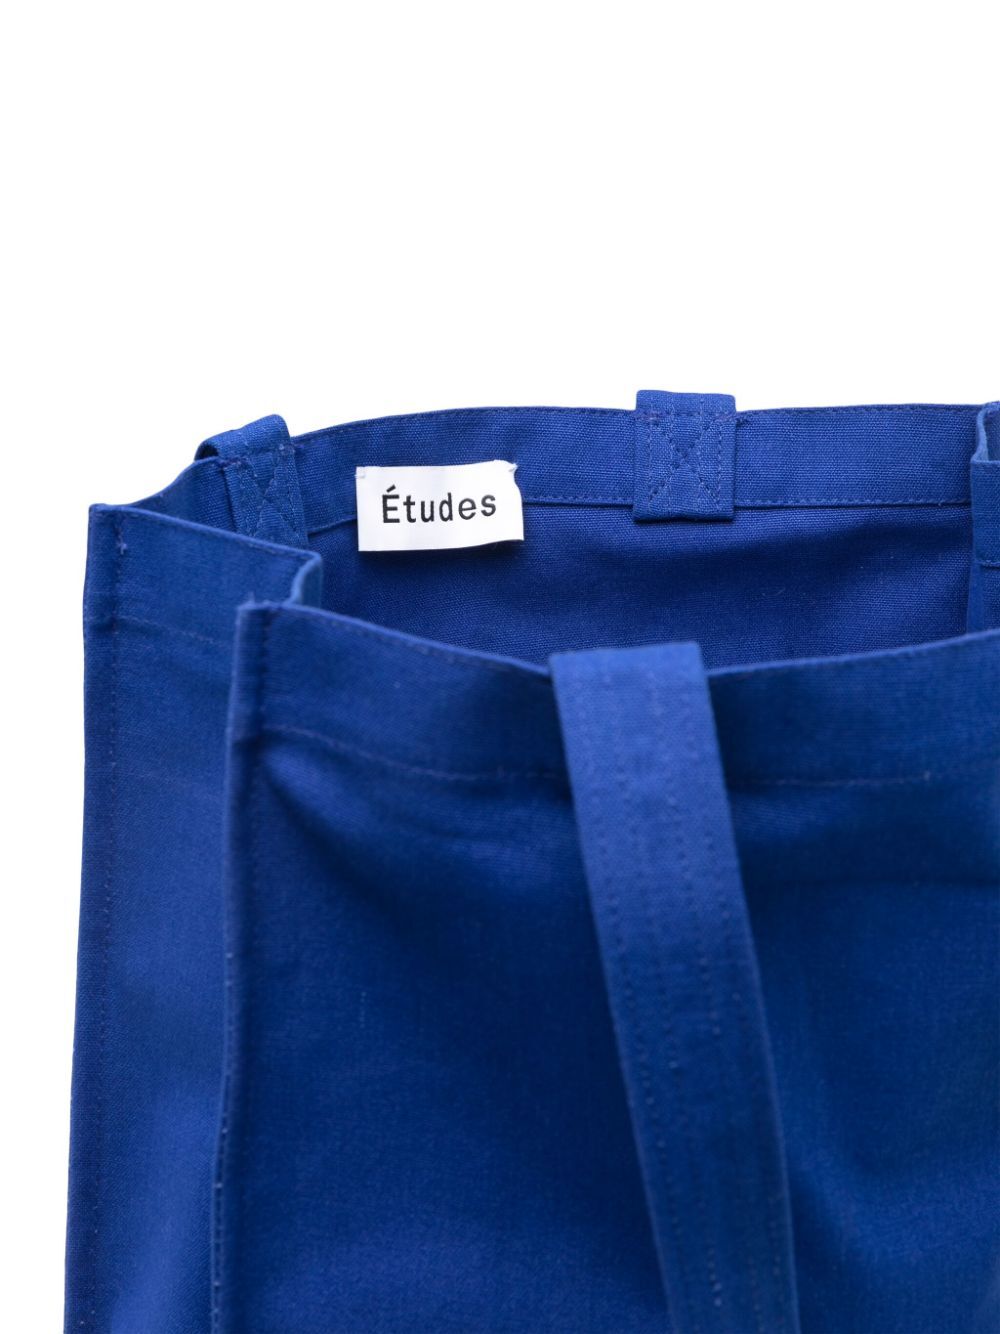 Blue November shopper bag